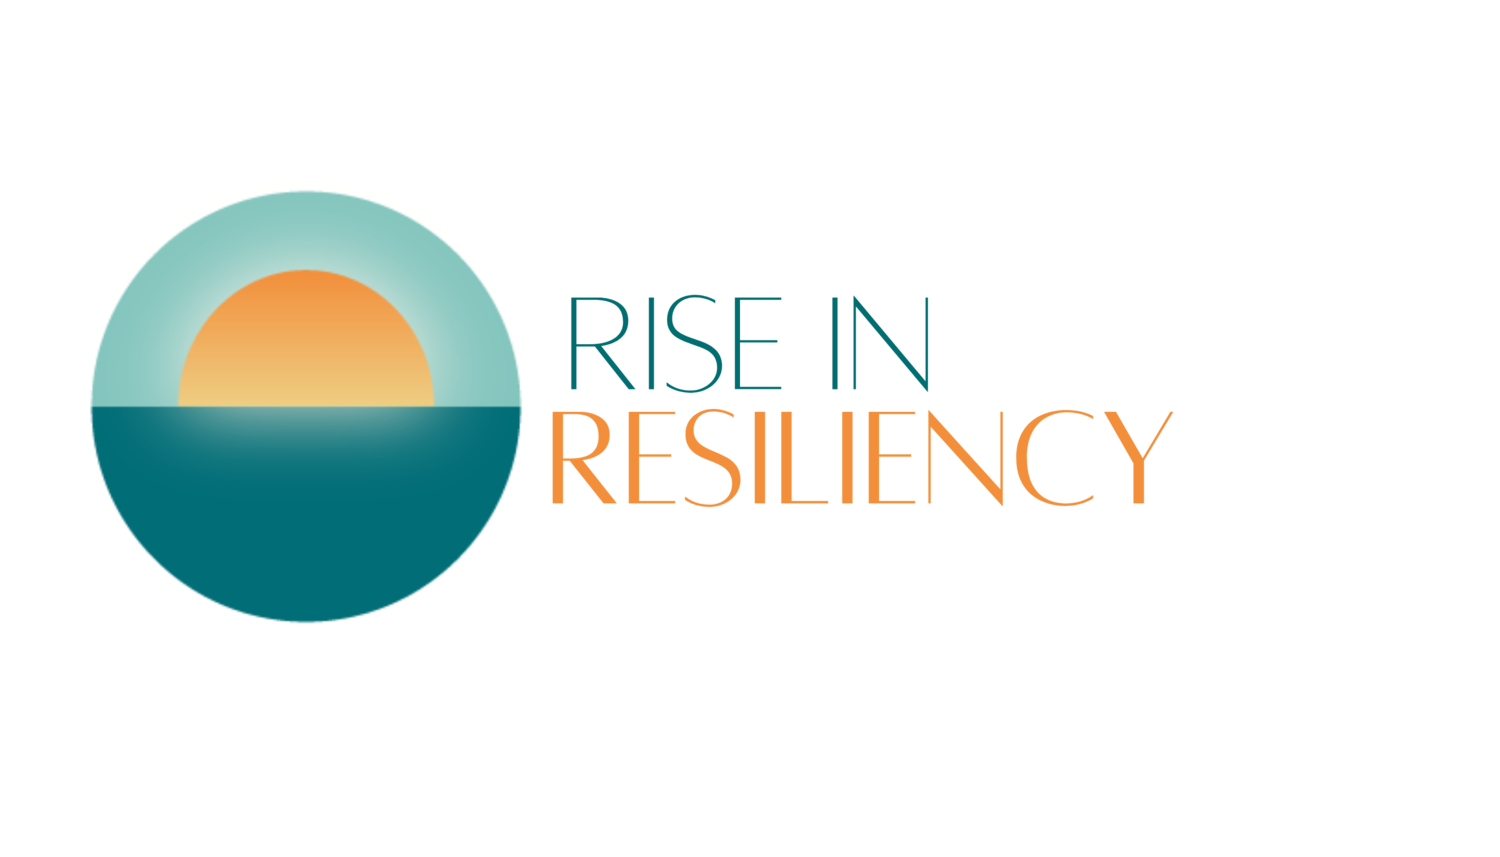 Rise in Resiliency